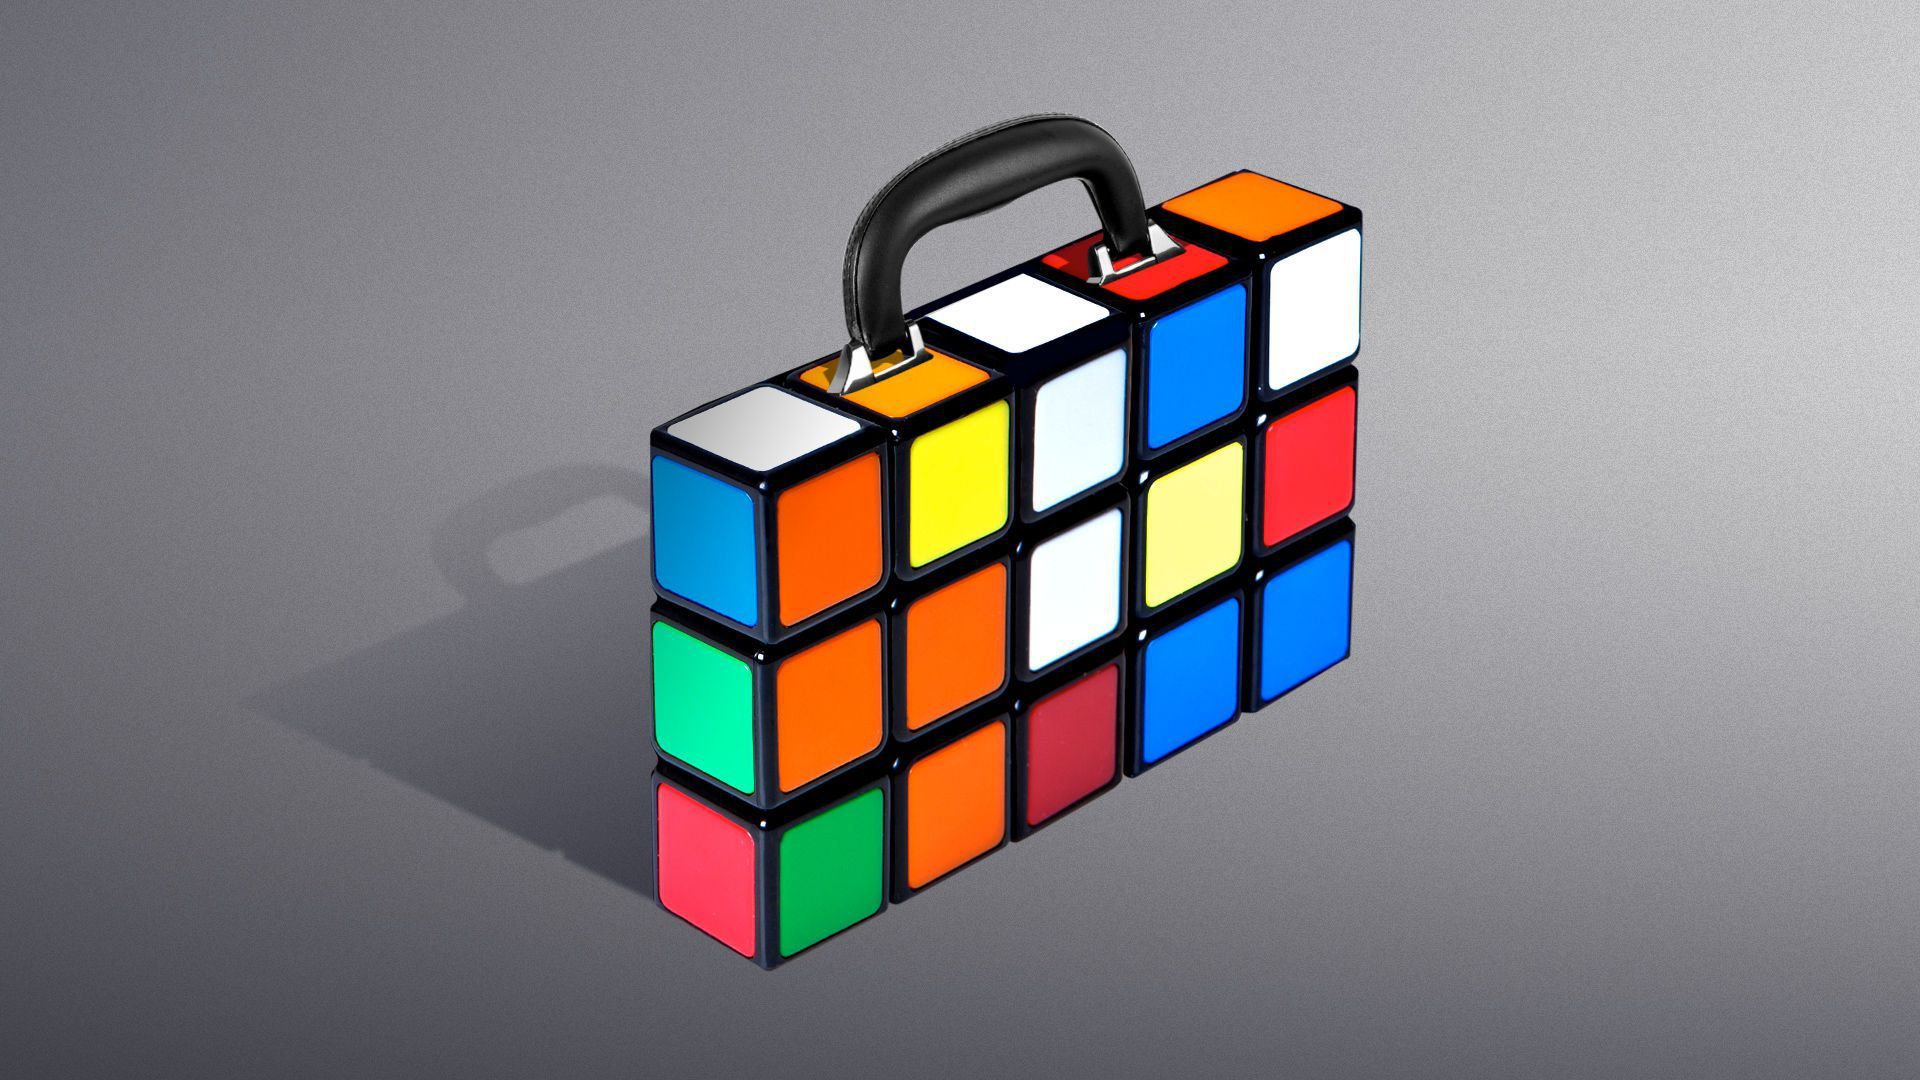 A Rubixk's cube on a briefcase.